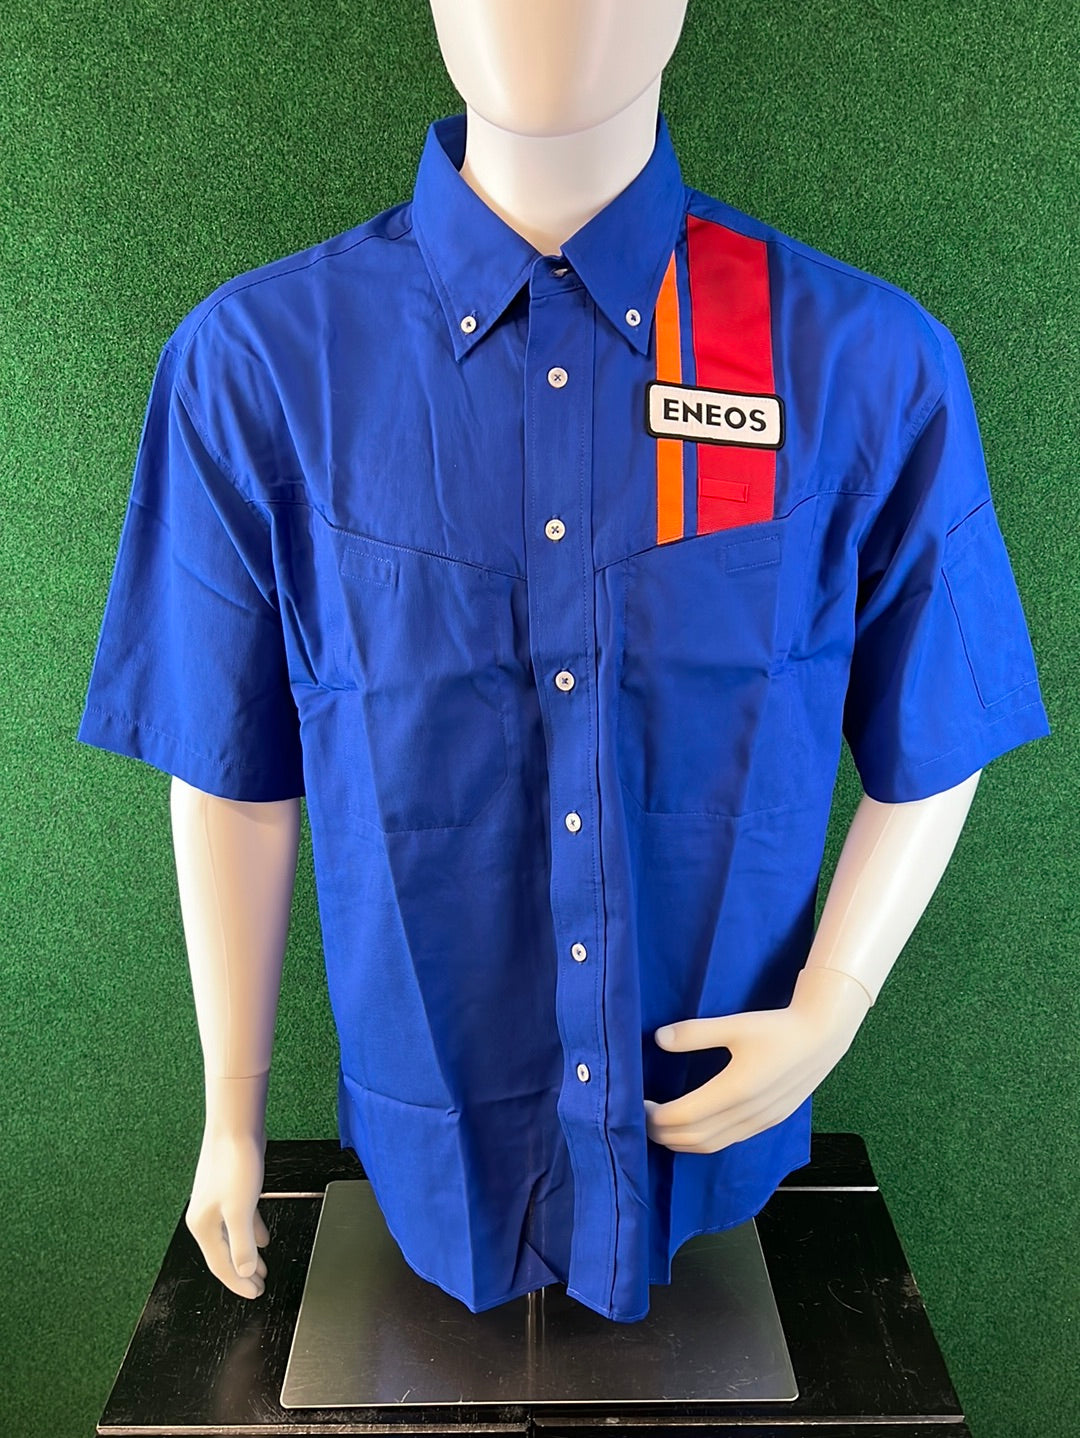 ENEOS - Japanese Service Station Employee Uniform Buttondown Short Sleeve Shirt - 3L